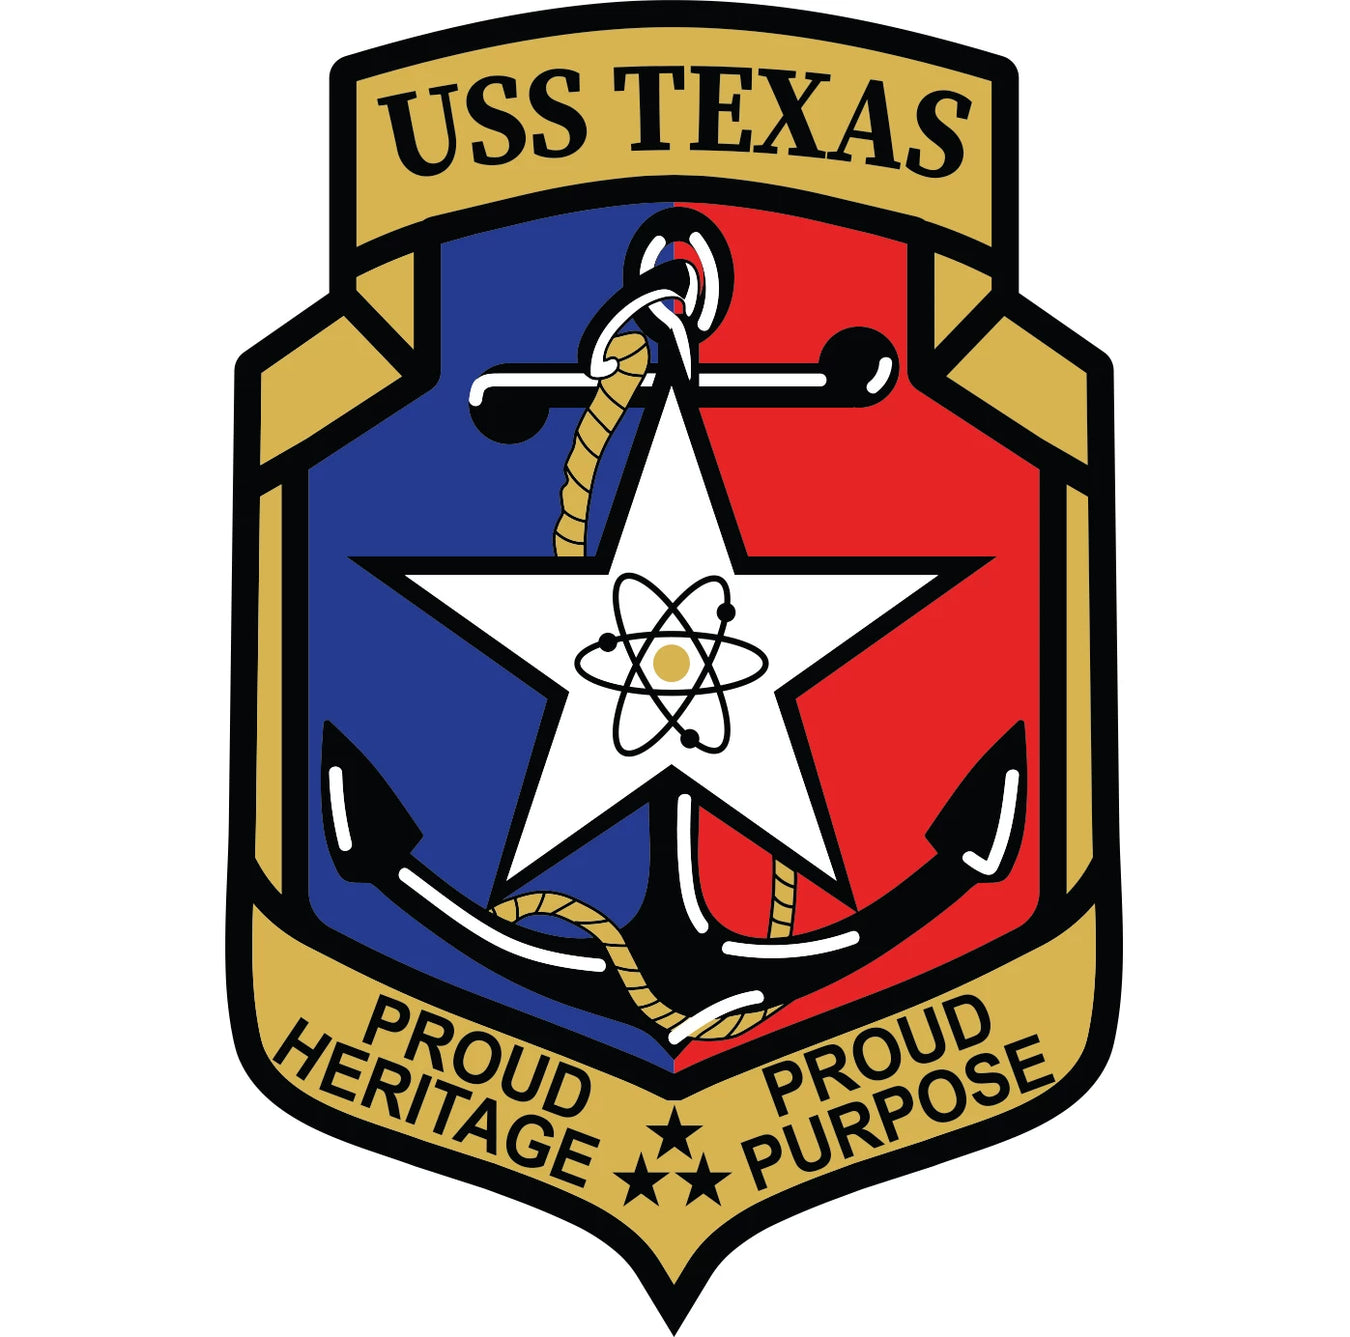 USS Texas (CGN-39)